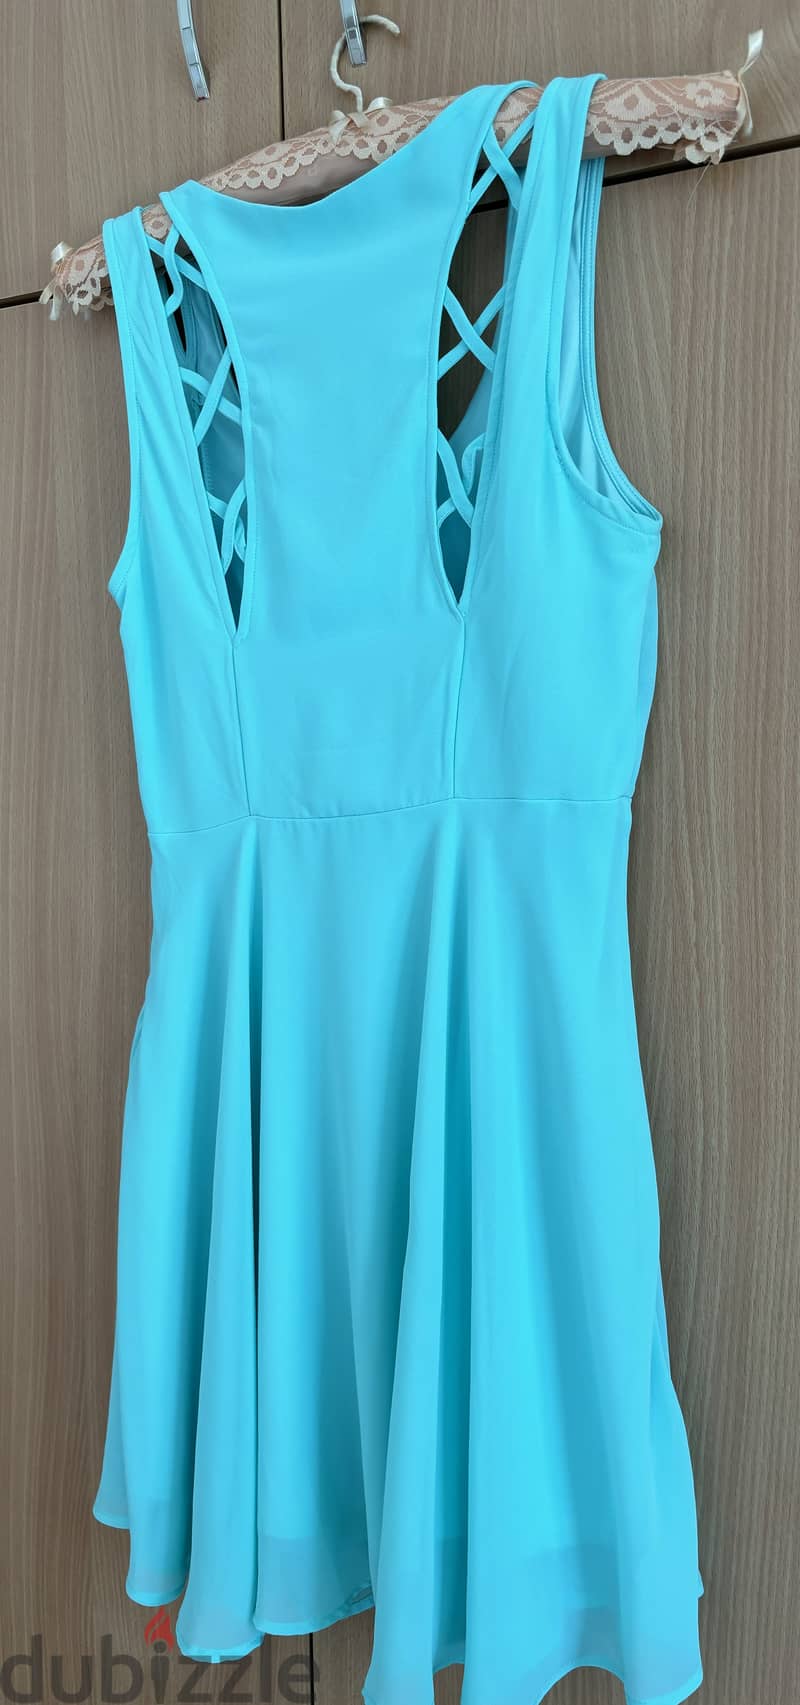 Aqua dress 2